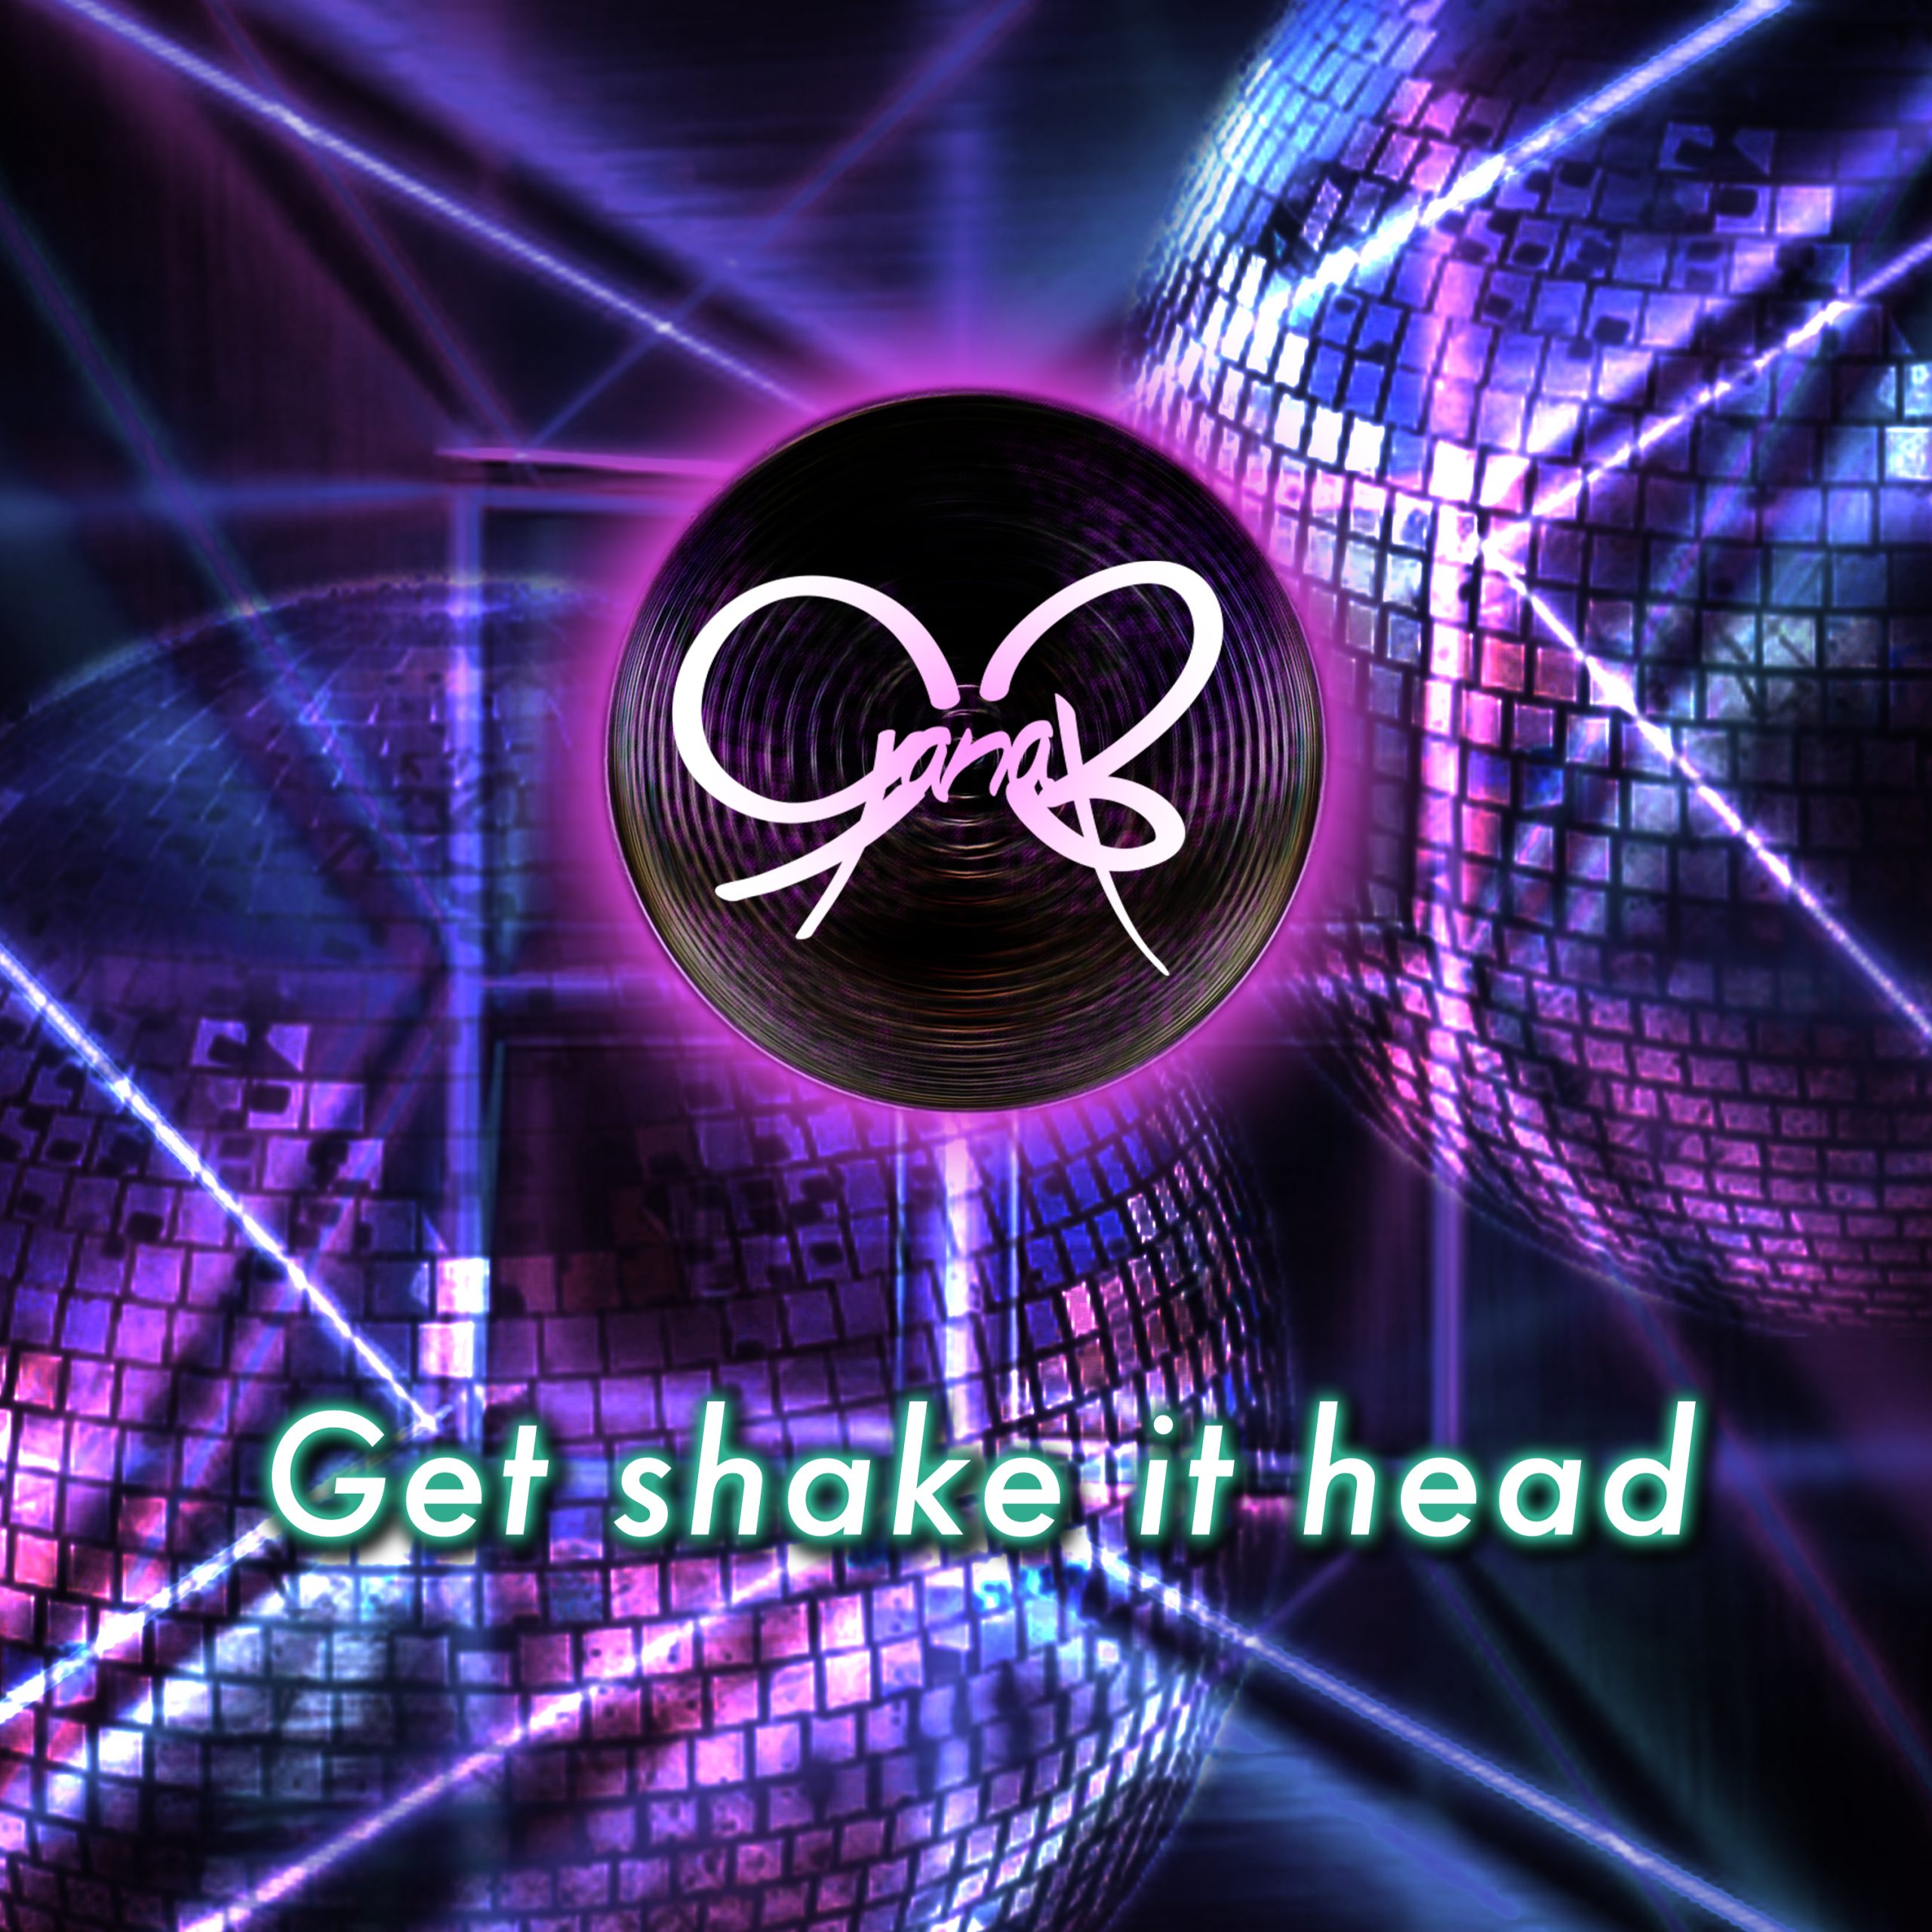 Get shake it head